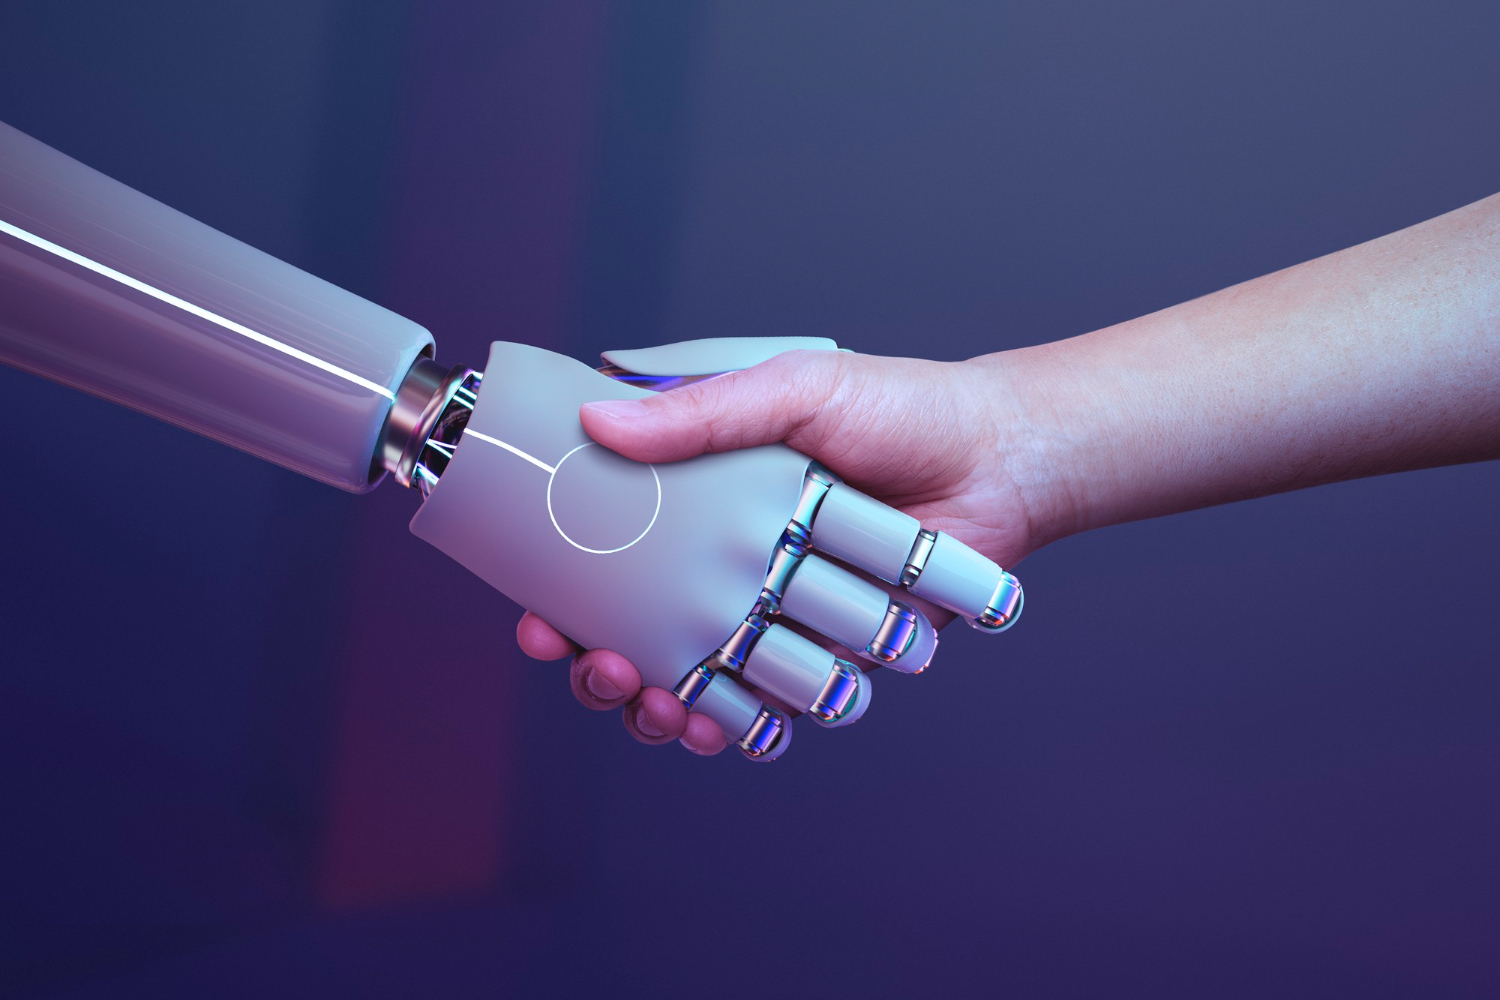  human centered technology robot handshakes human